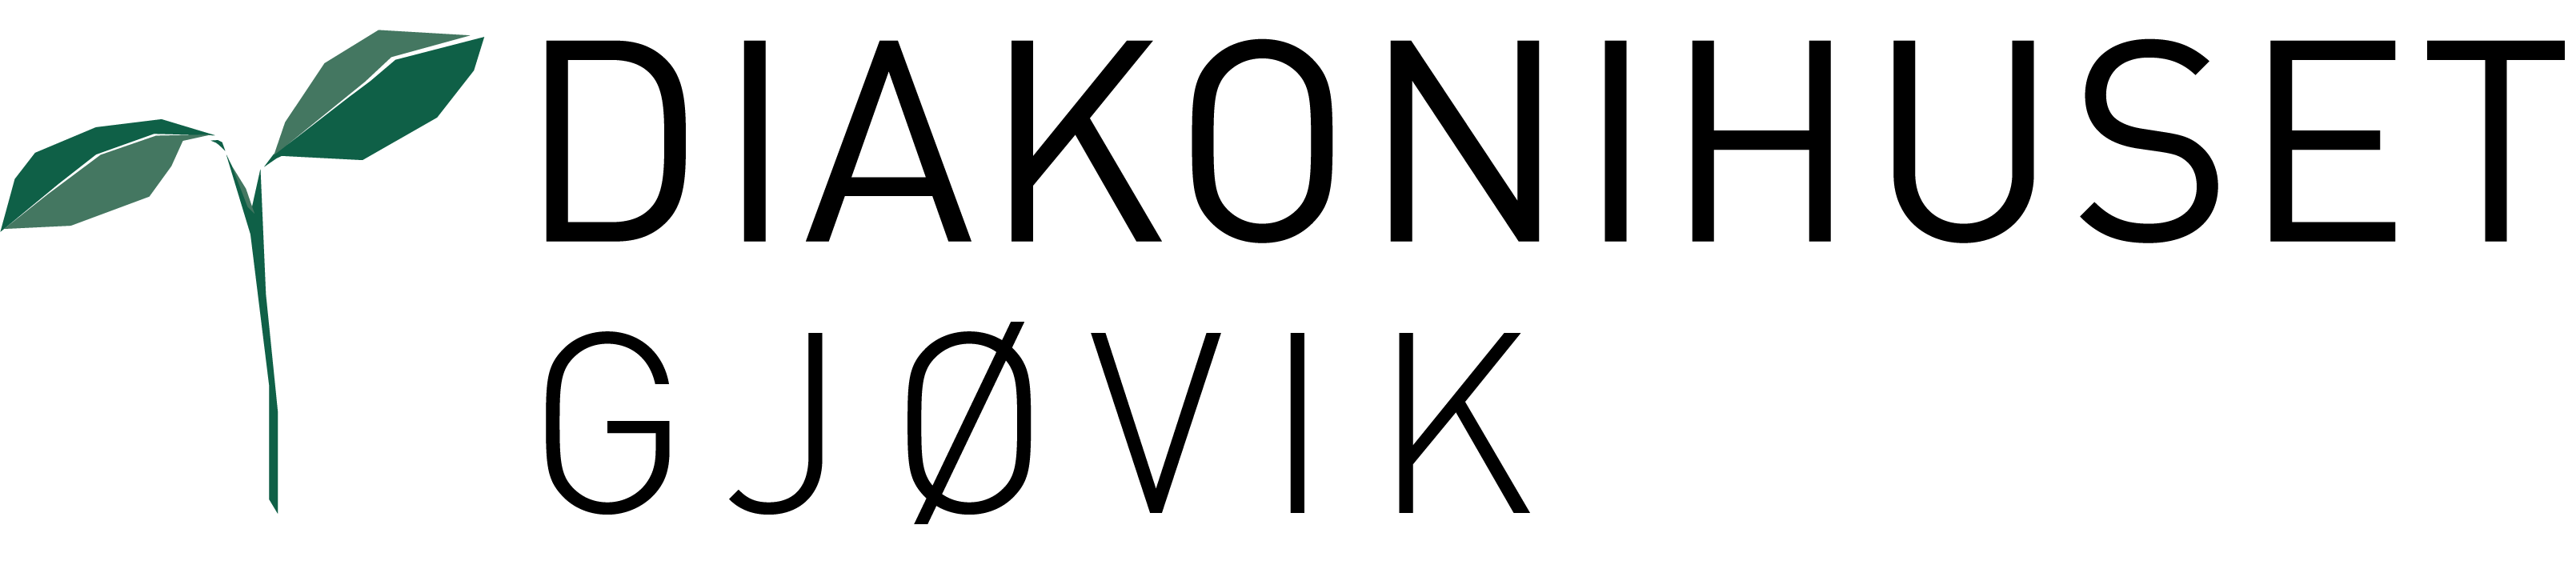 Diakonene i Gjøvik logo